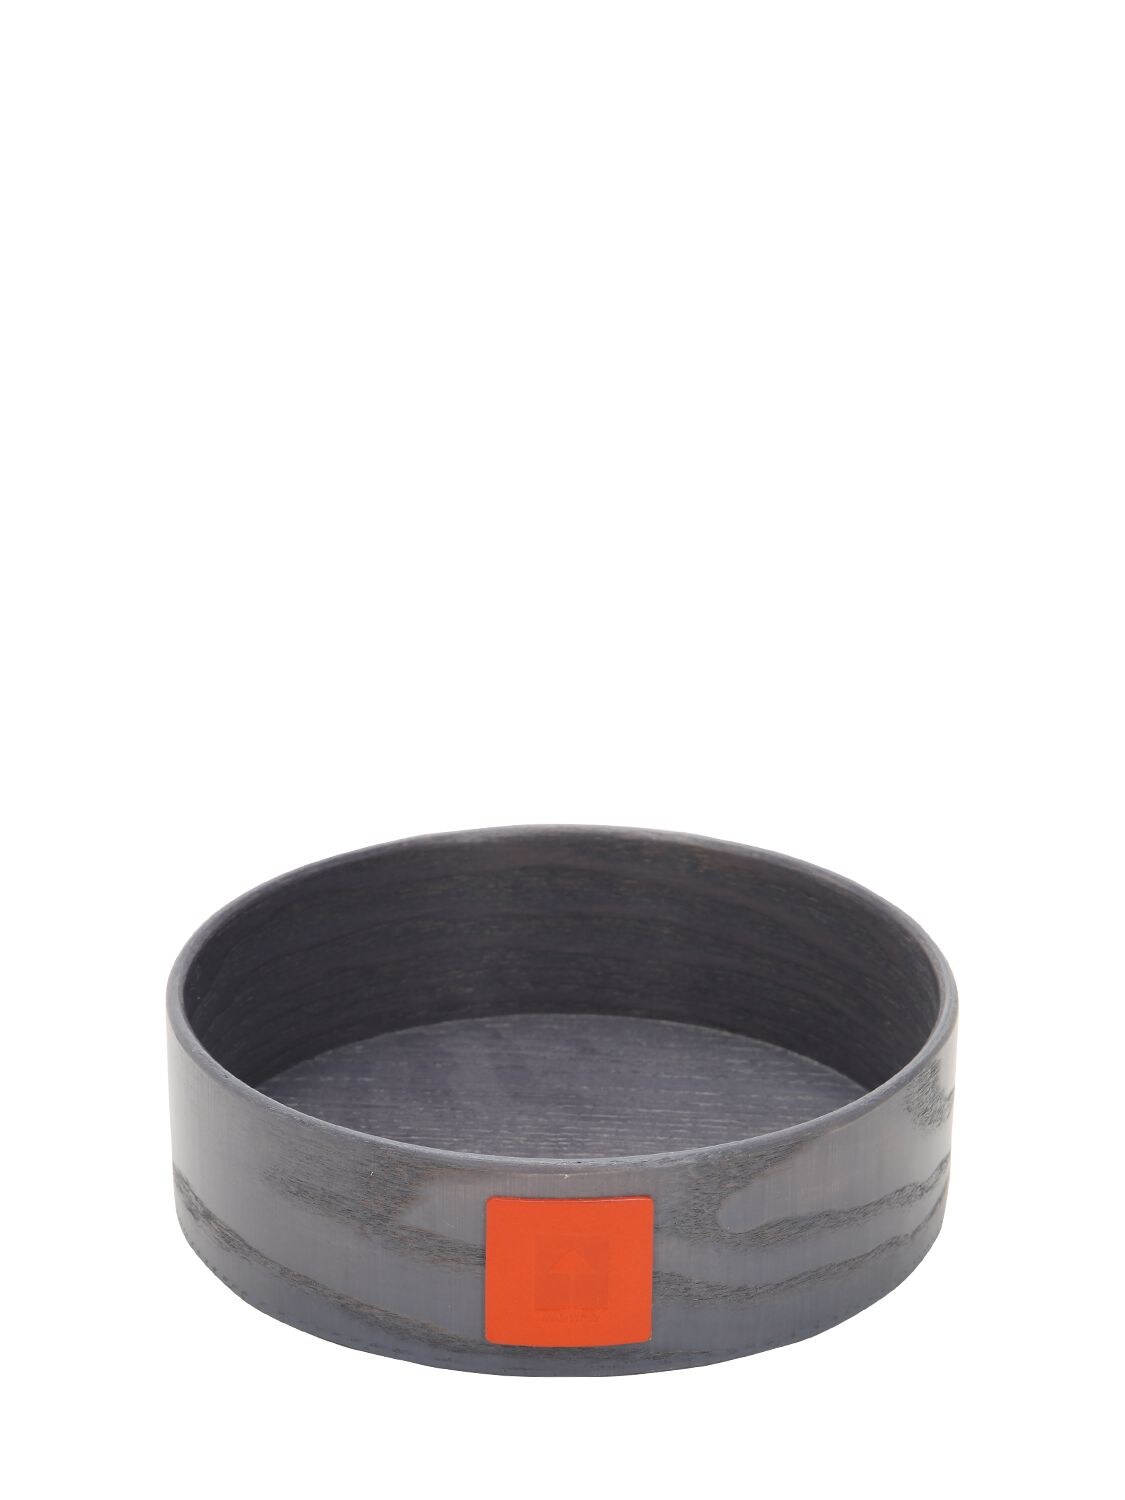 Armani/casa Goccia Round Leather & Wood Container In Grey,orange